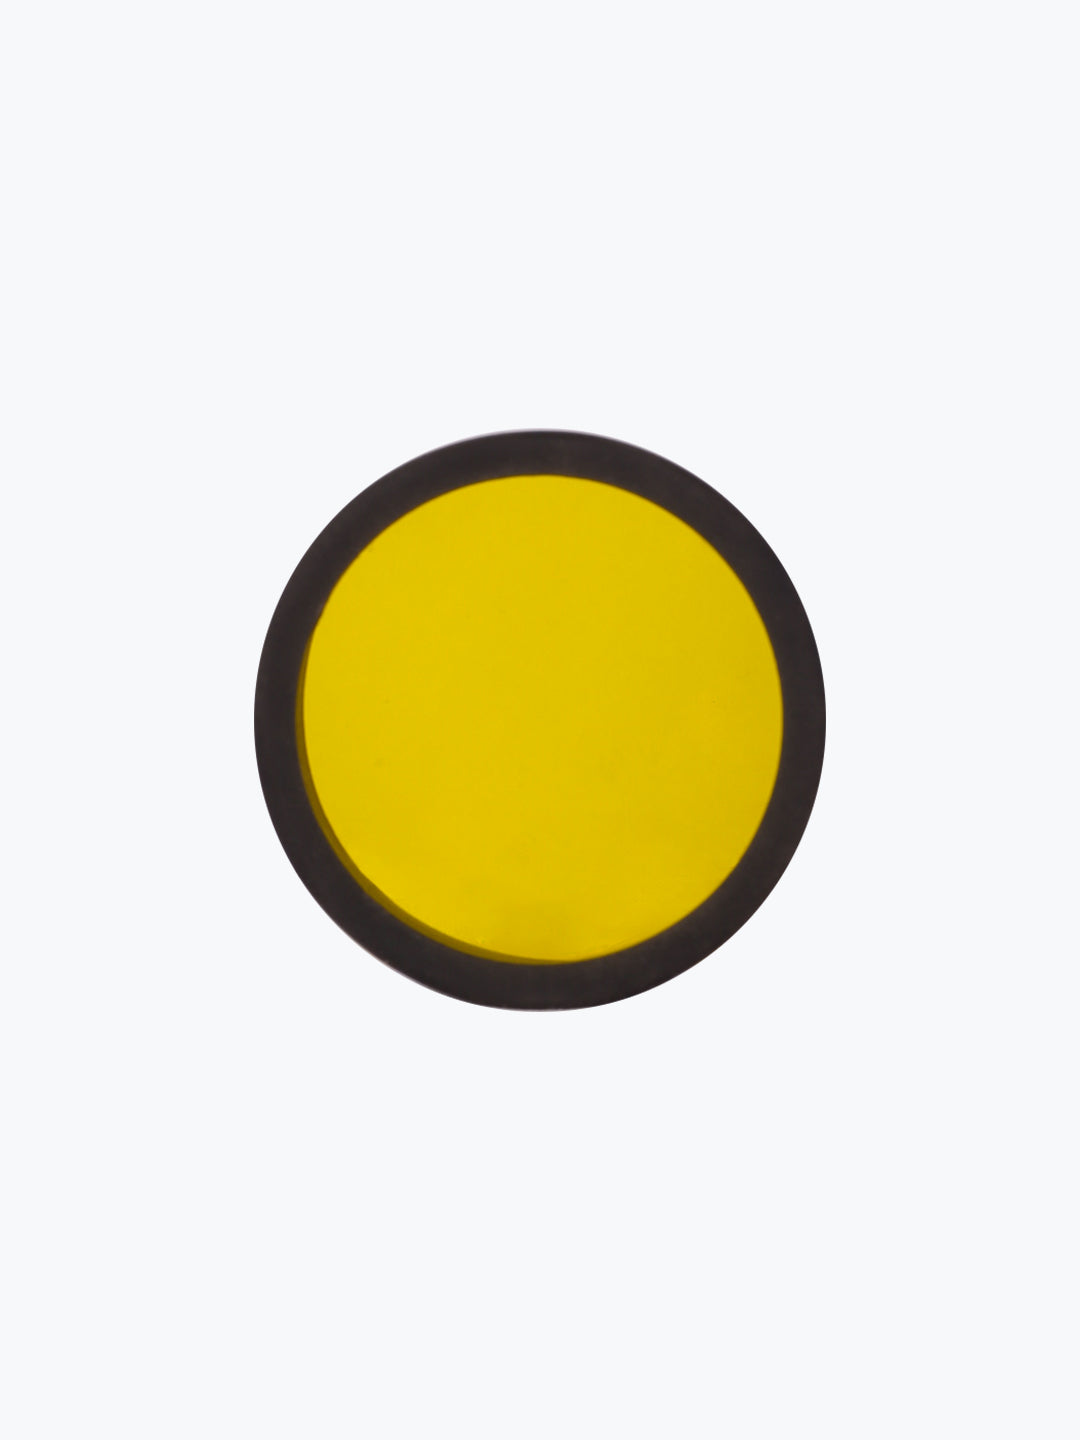 Fog Light Yellow Cap Round